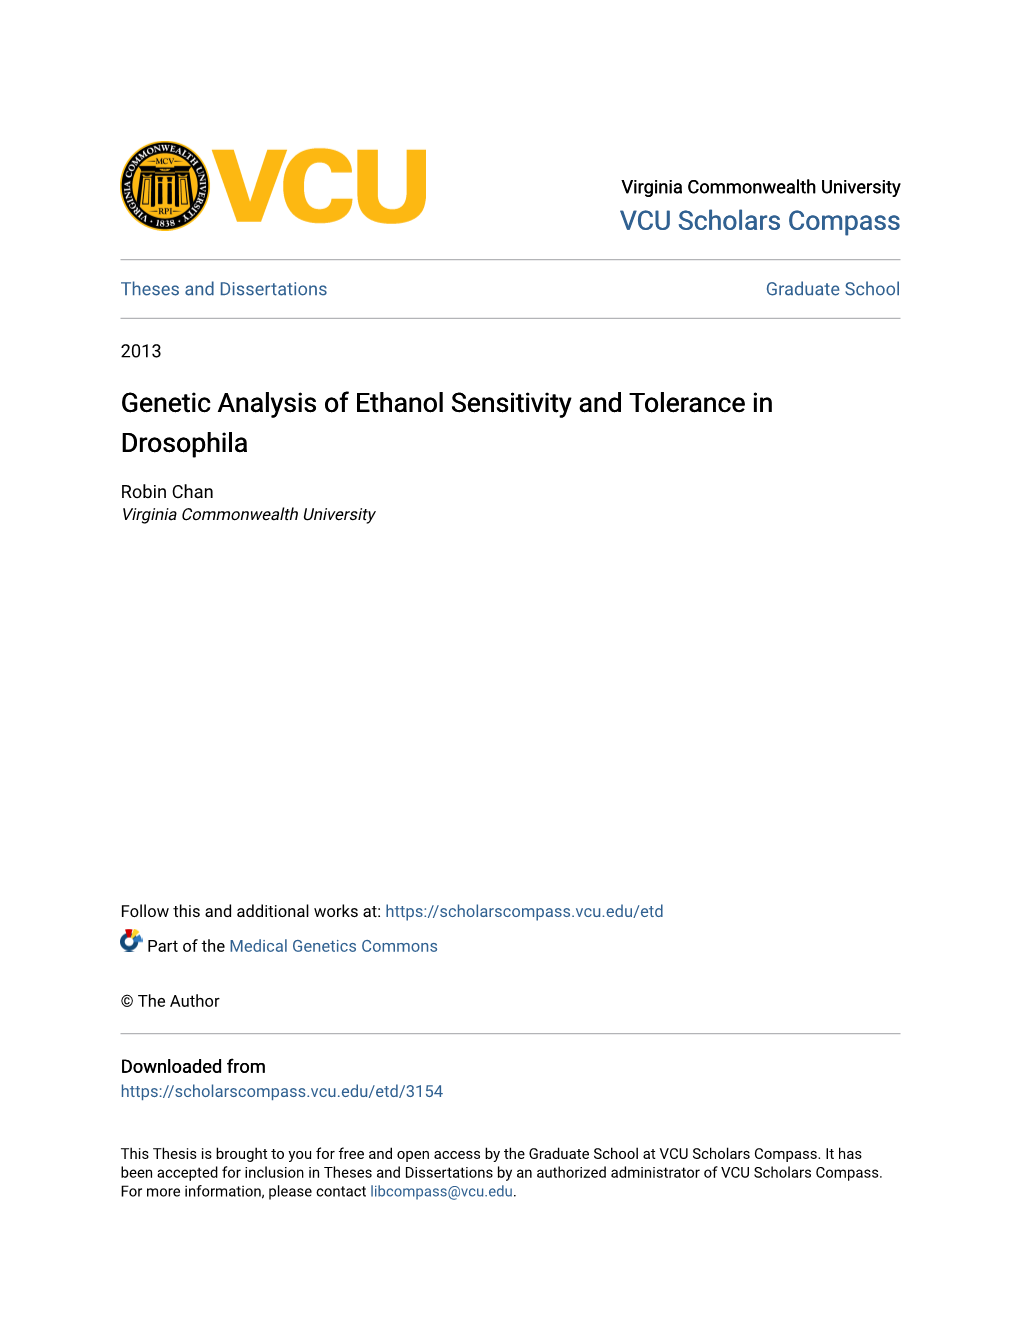 Genetic Analysis of Ethanol Sensitivity and Tolerance in Drosophila